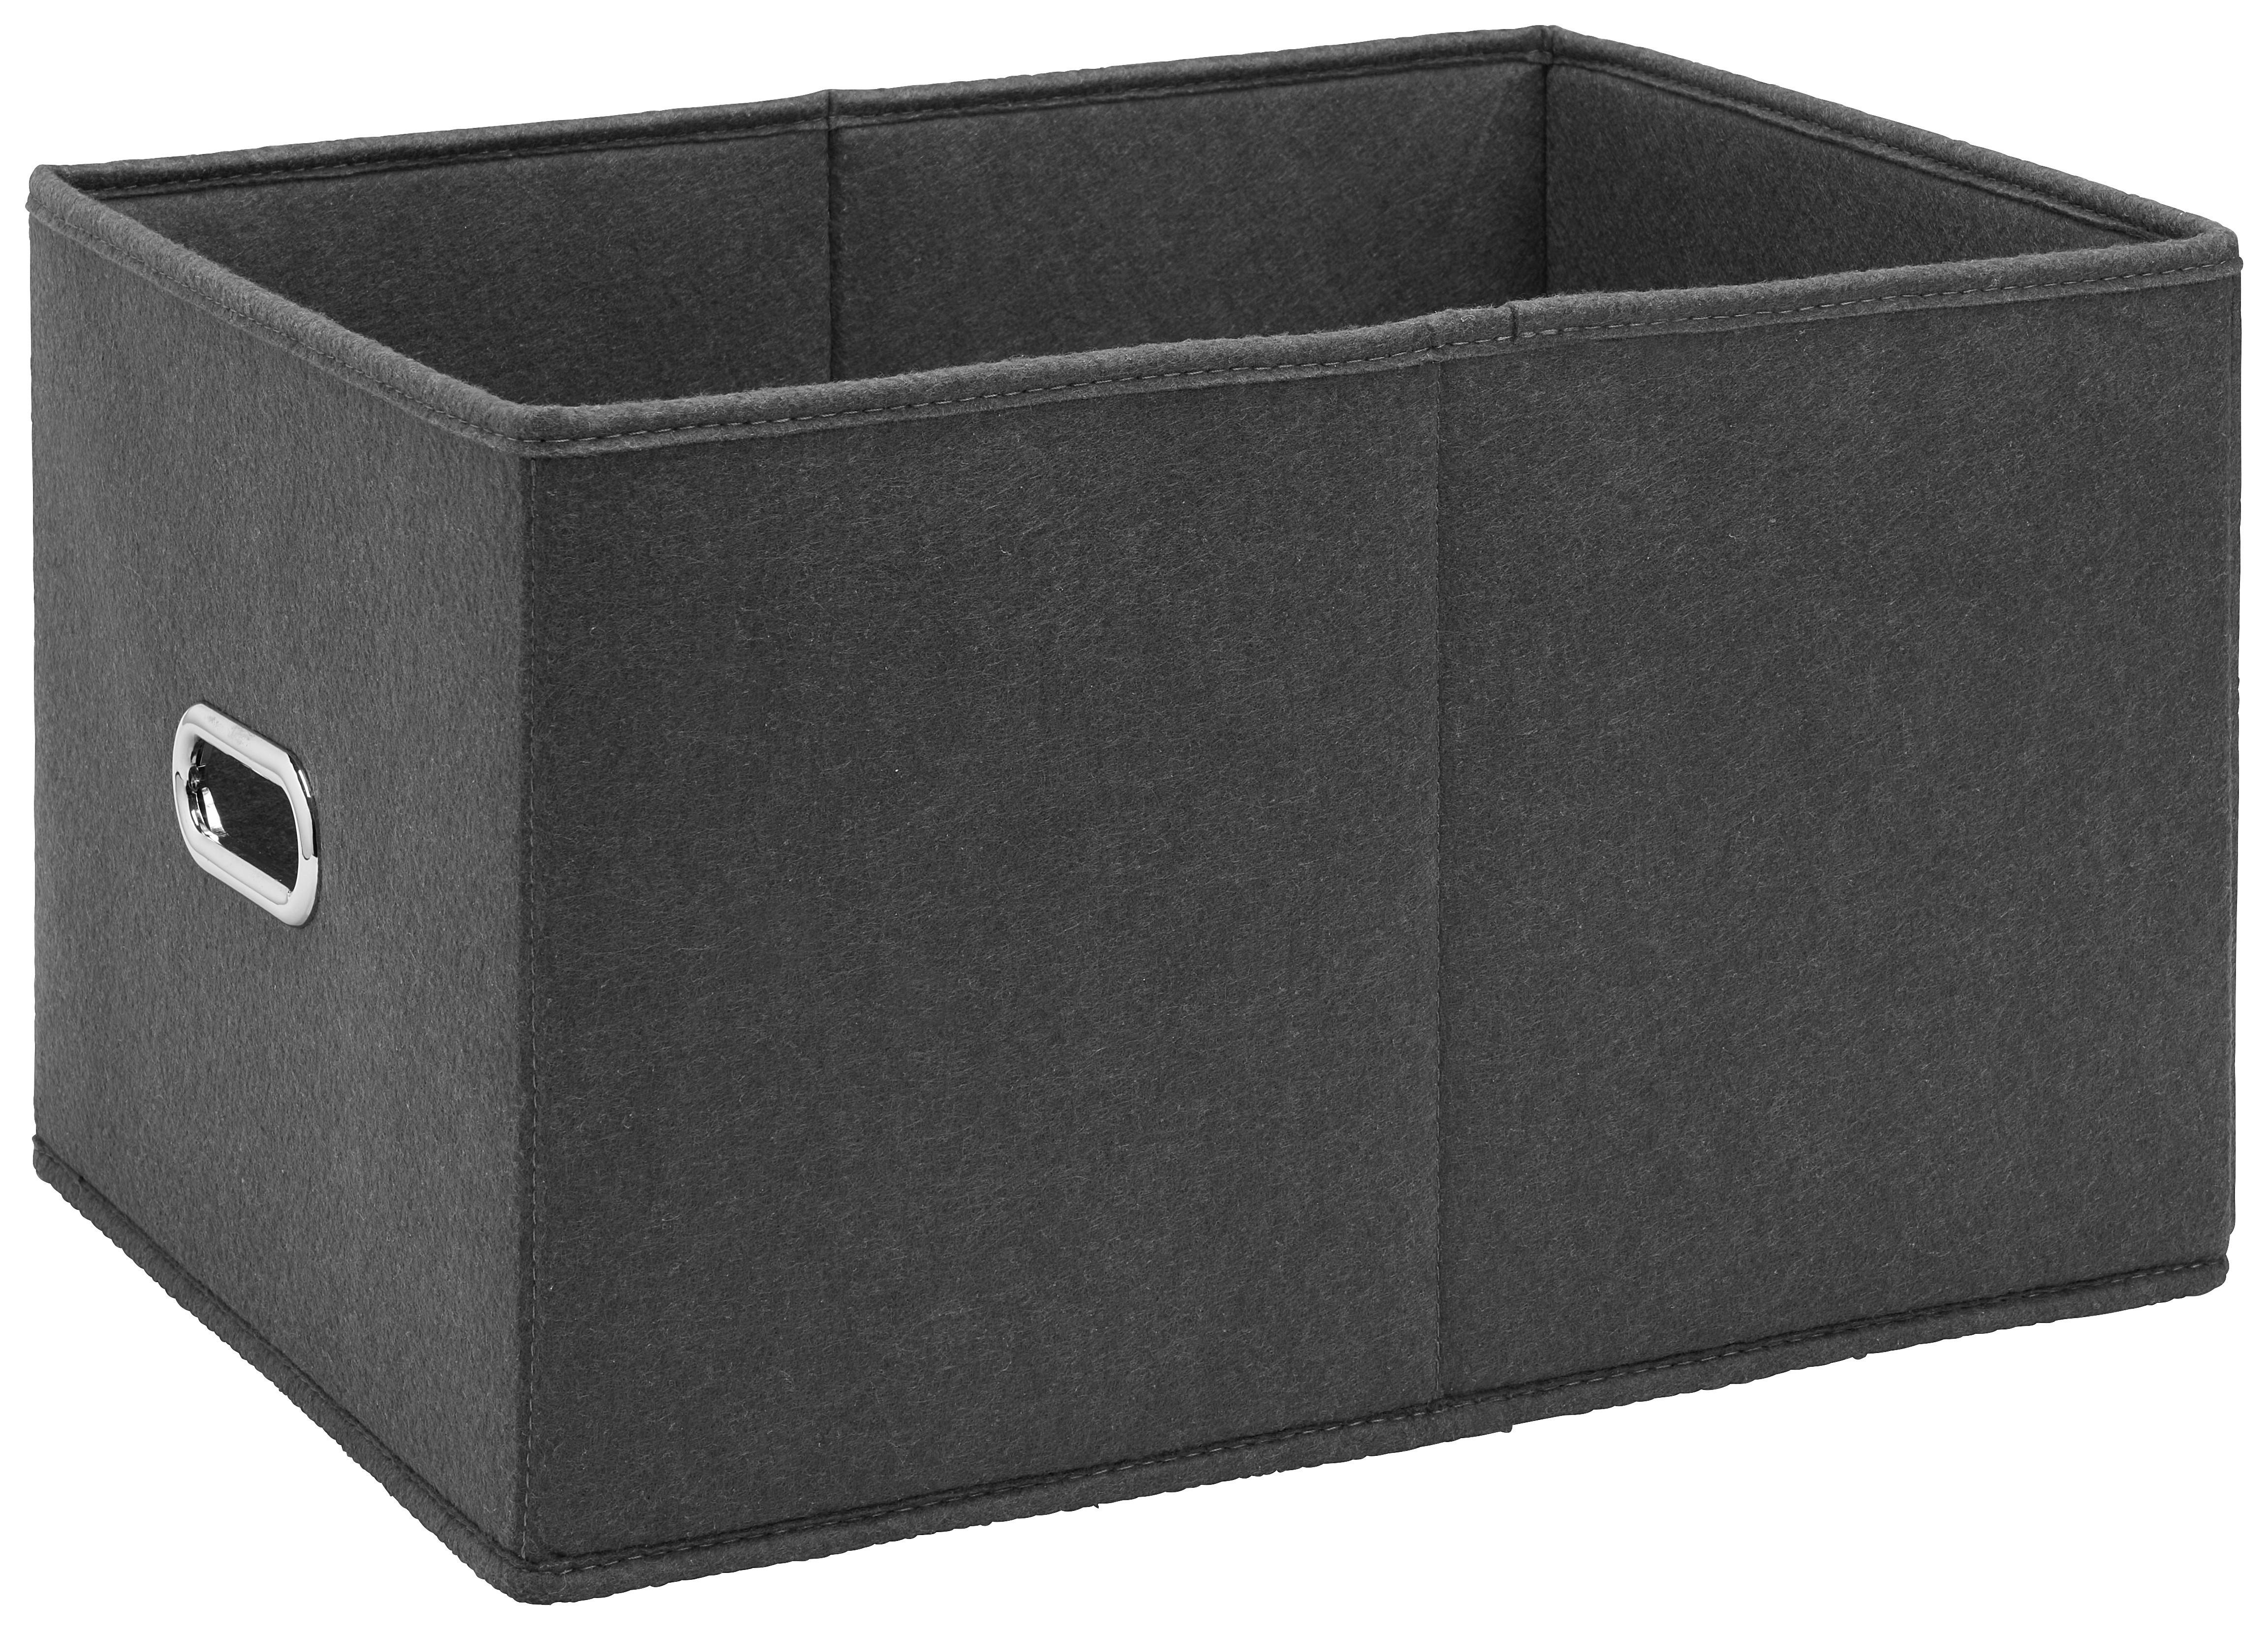 Úložný Box Unit, L - šedá, Konvenční, textil/plast (33/43,5/24.5cm) - Premium Living